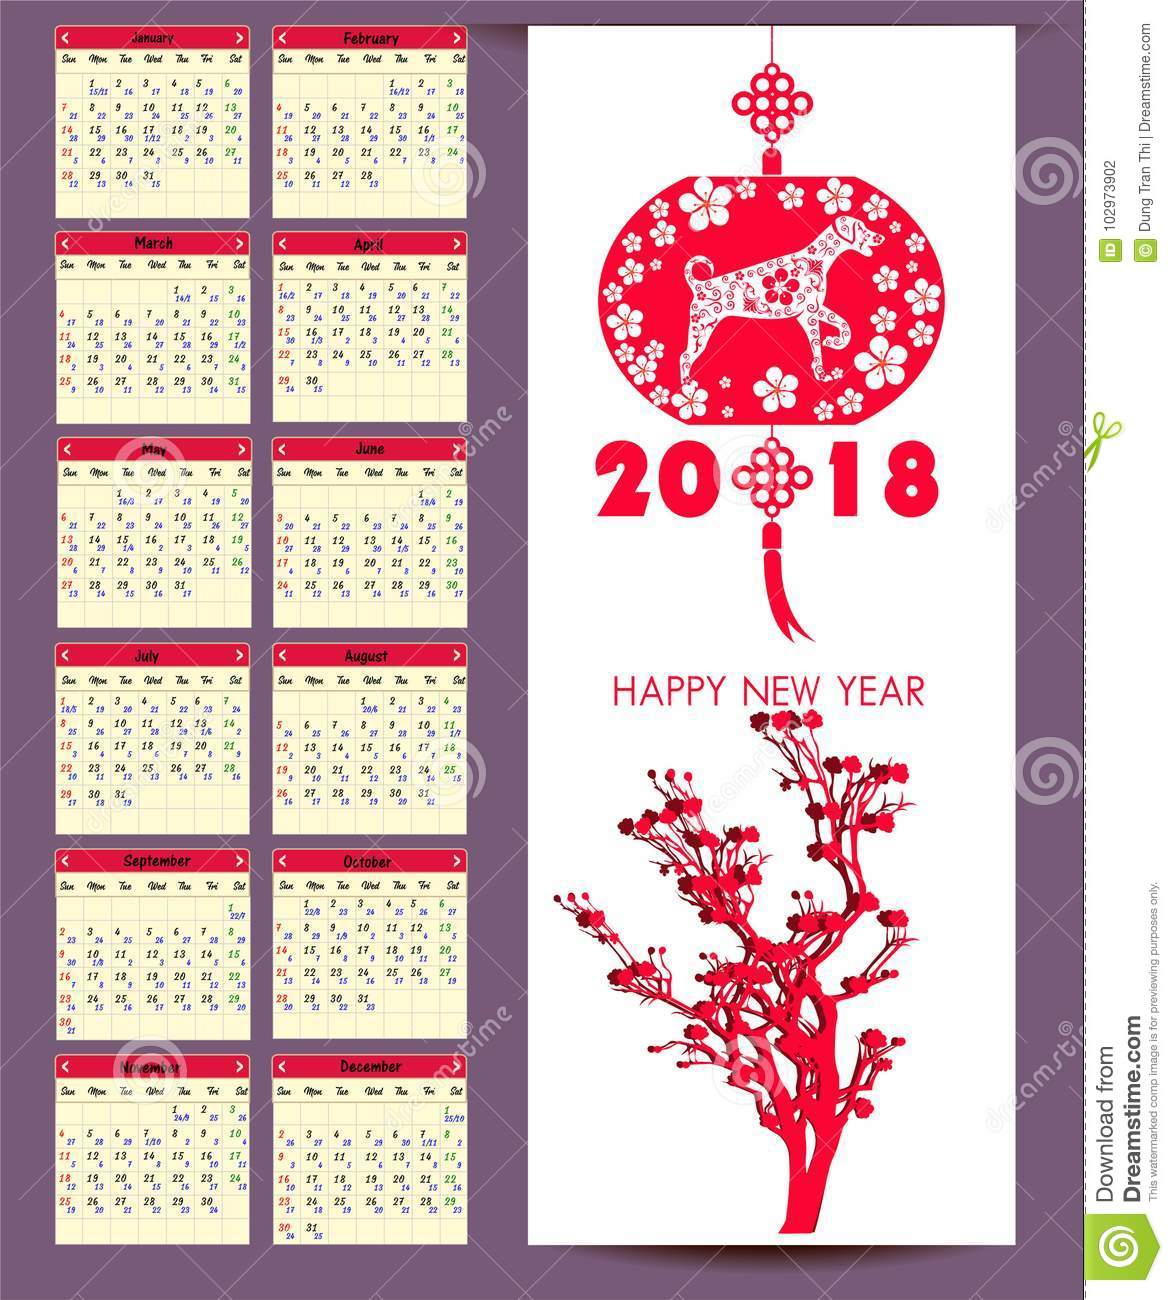 Lunar Calendar, Chinese Calendar For Happy New Year 2018